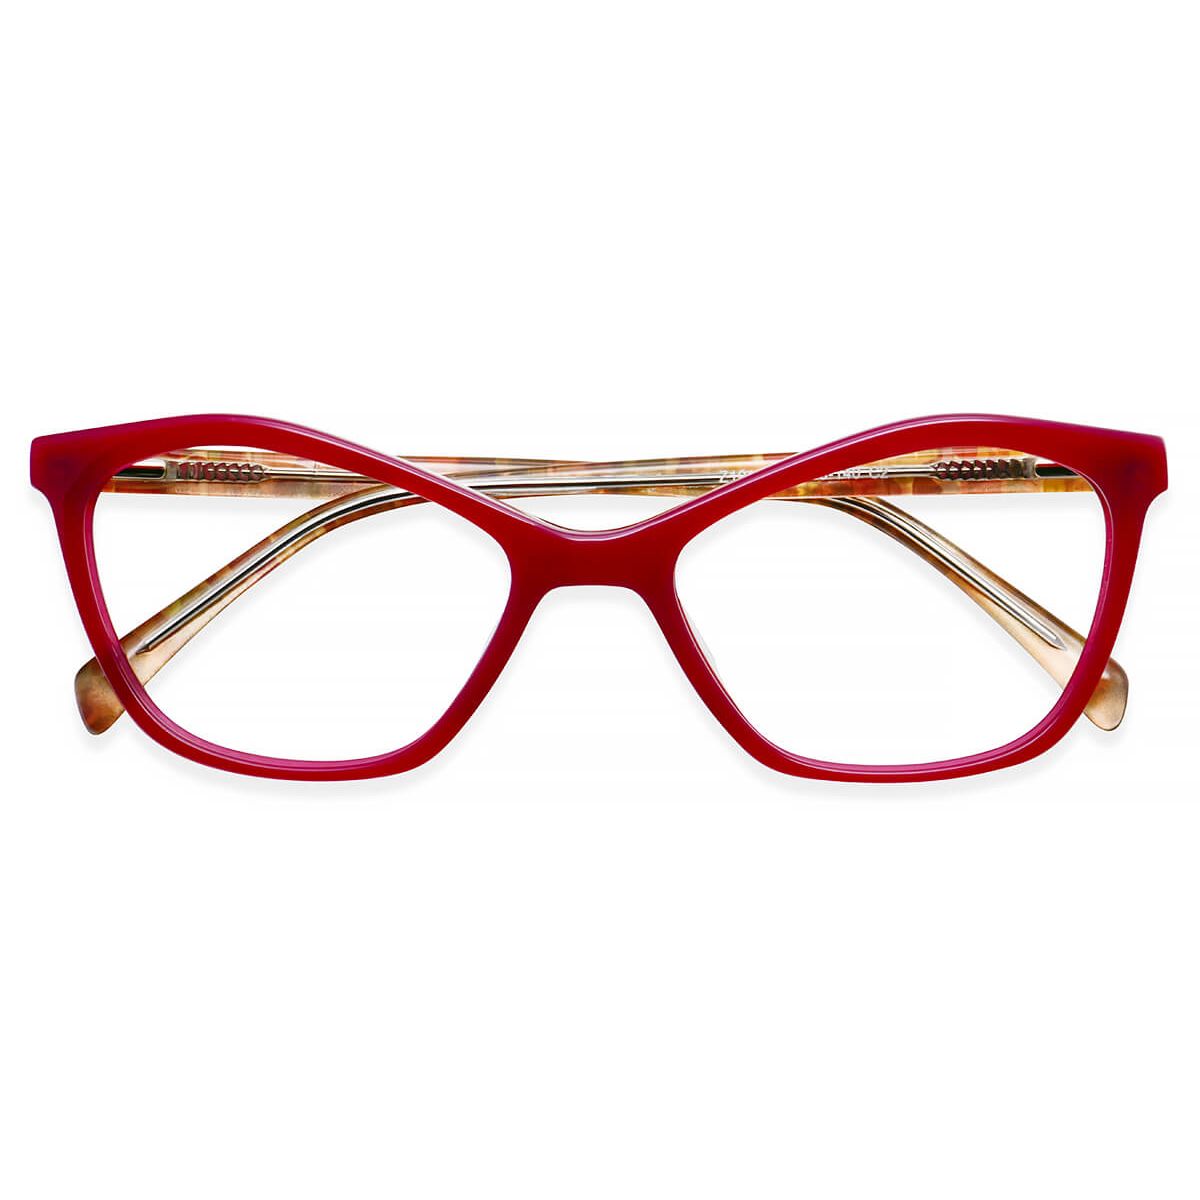 Z1010 Cat-eye Butterfly Red Eyeglasses Frames | Leoptique